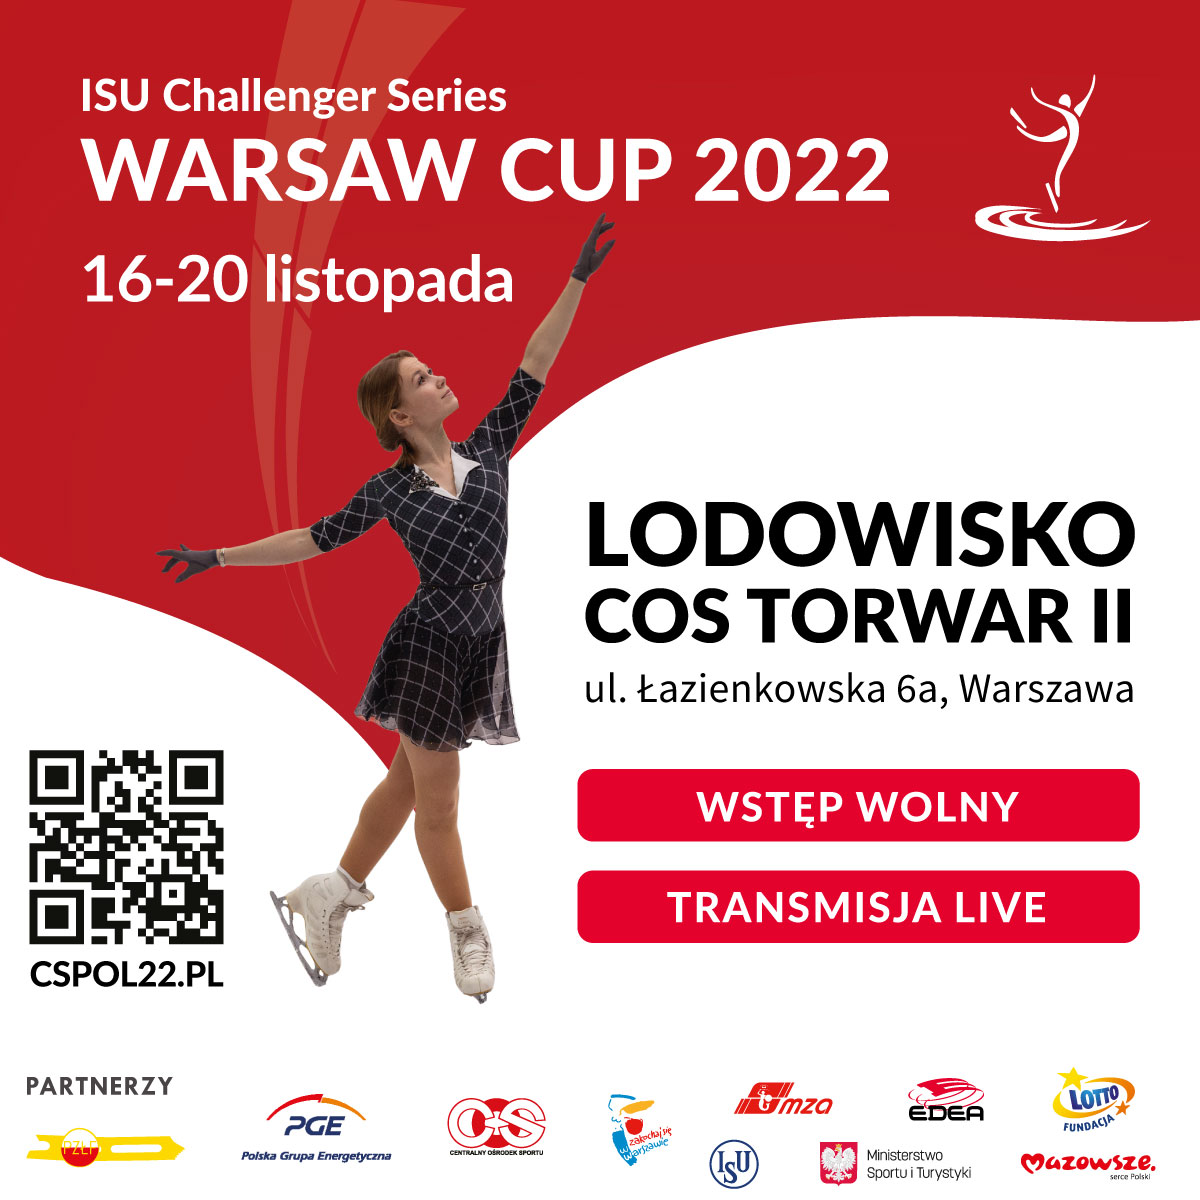 ISU Challenger Series Warsaw Cup 2022